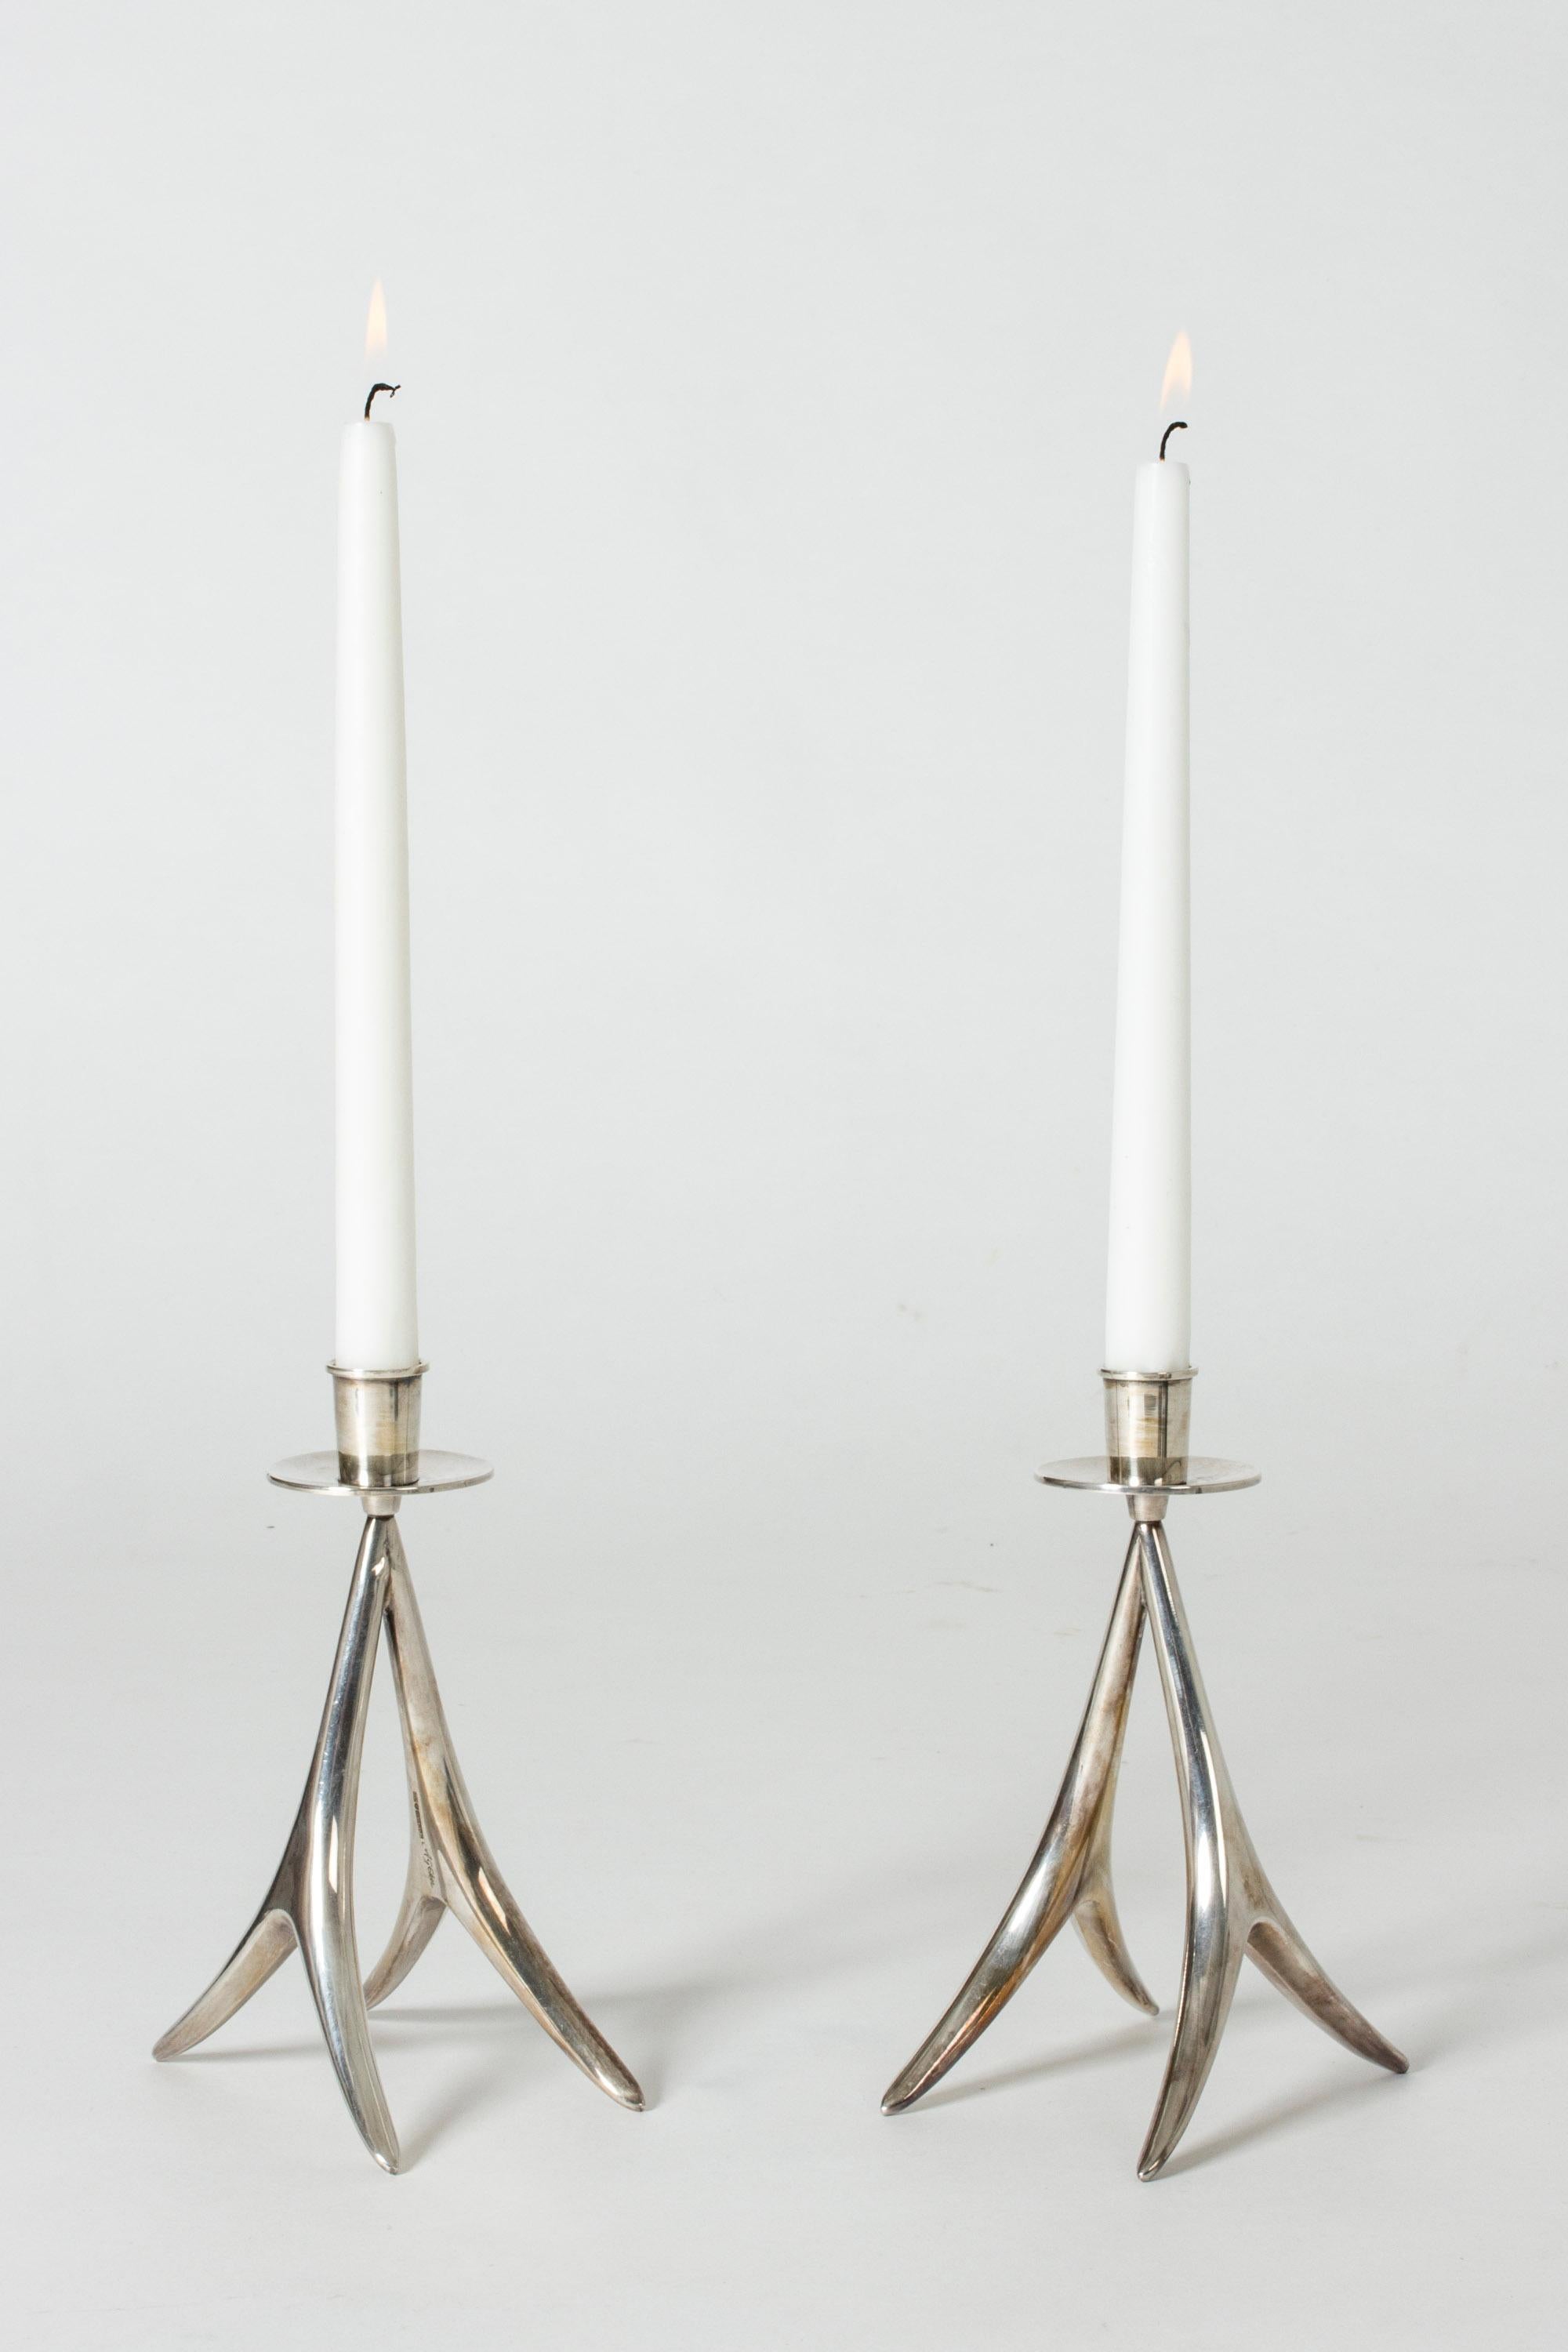 Pair of graceful silver candlesticks by Anna Greta Eker for Kultateollisuus Ky. Nice combination of modernism and organic influences.